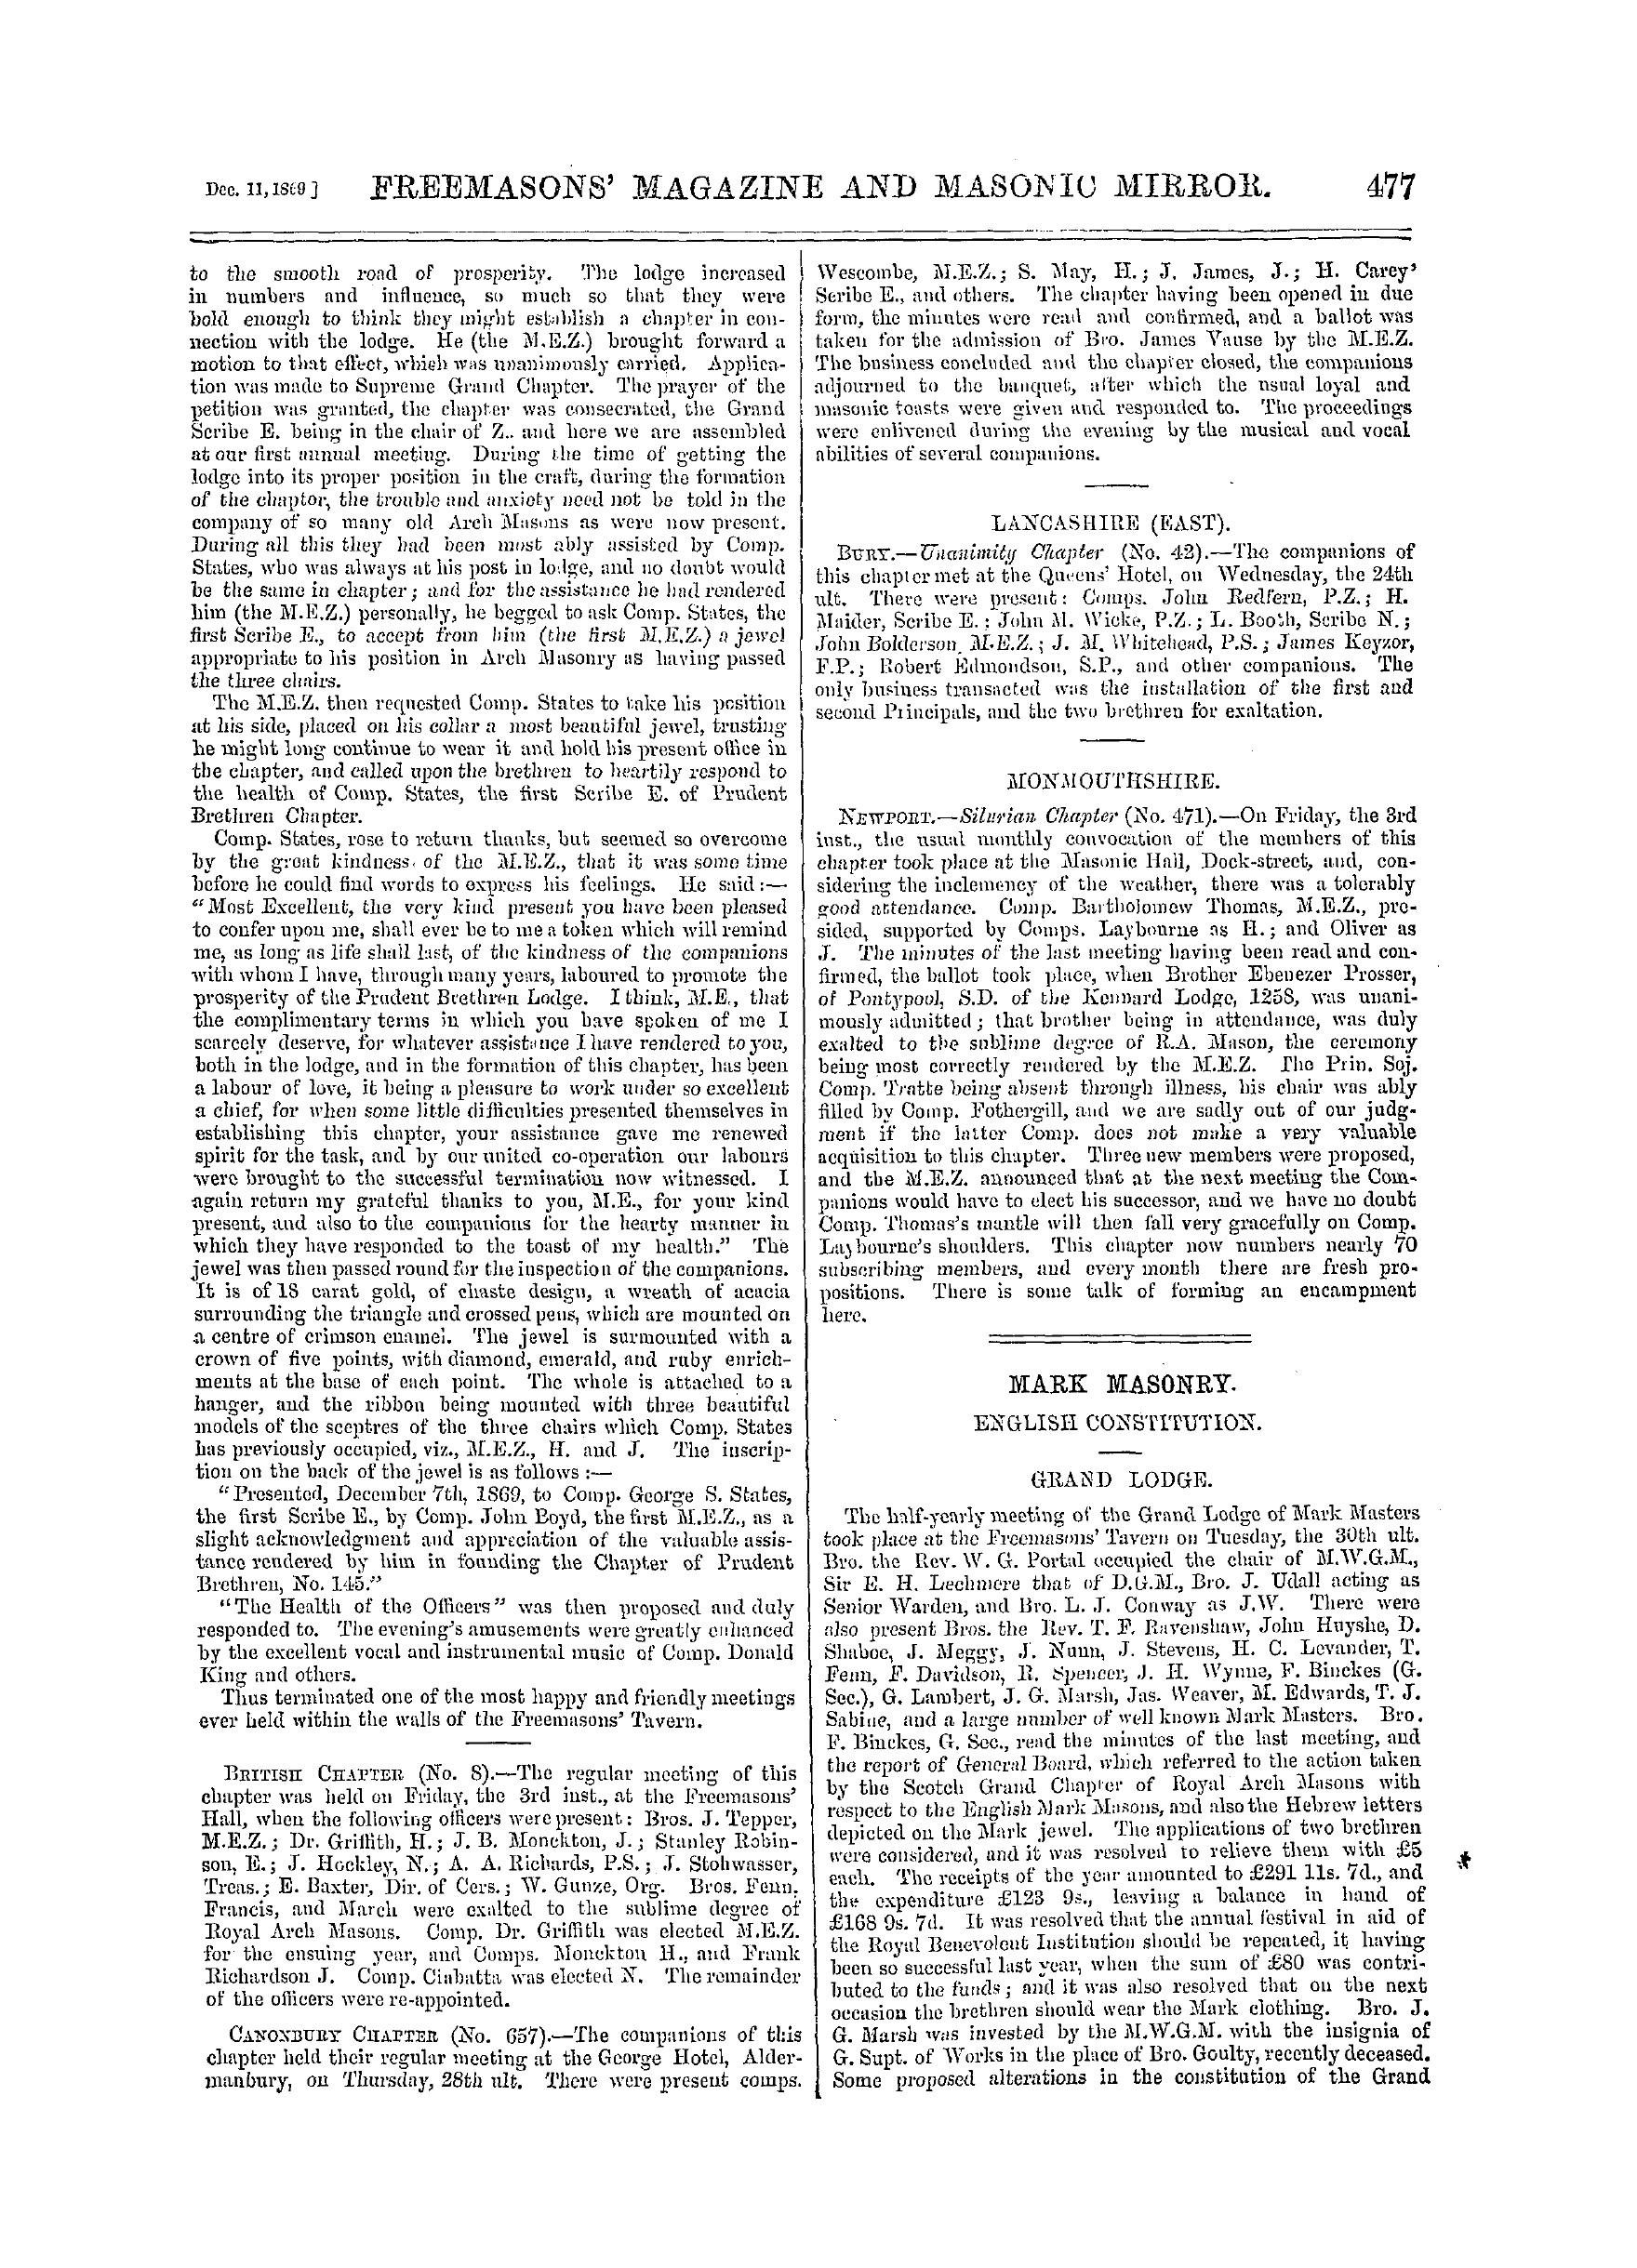 The Freemasons' Monthly Magazine: 1869-12-11 - Royal Arch.